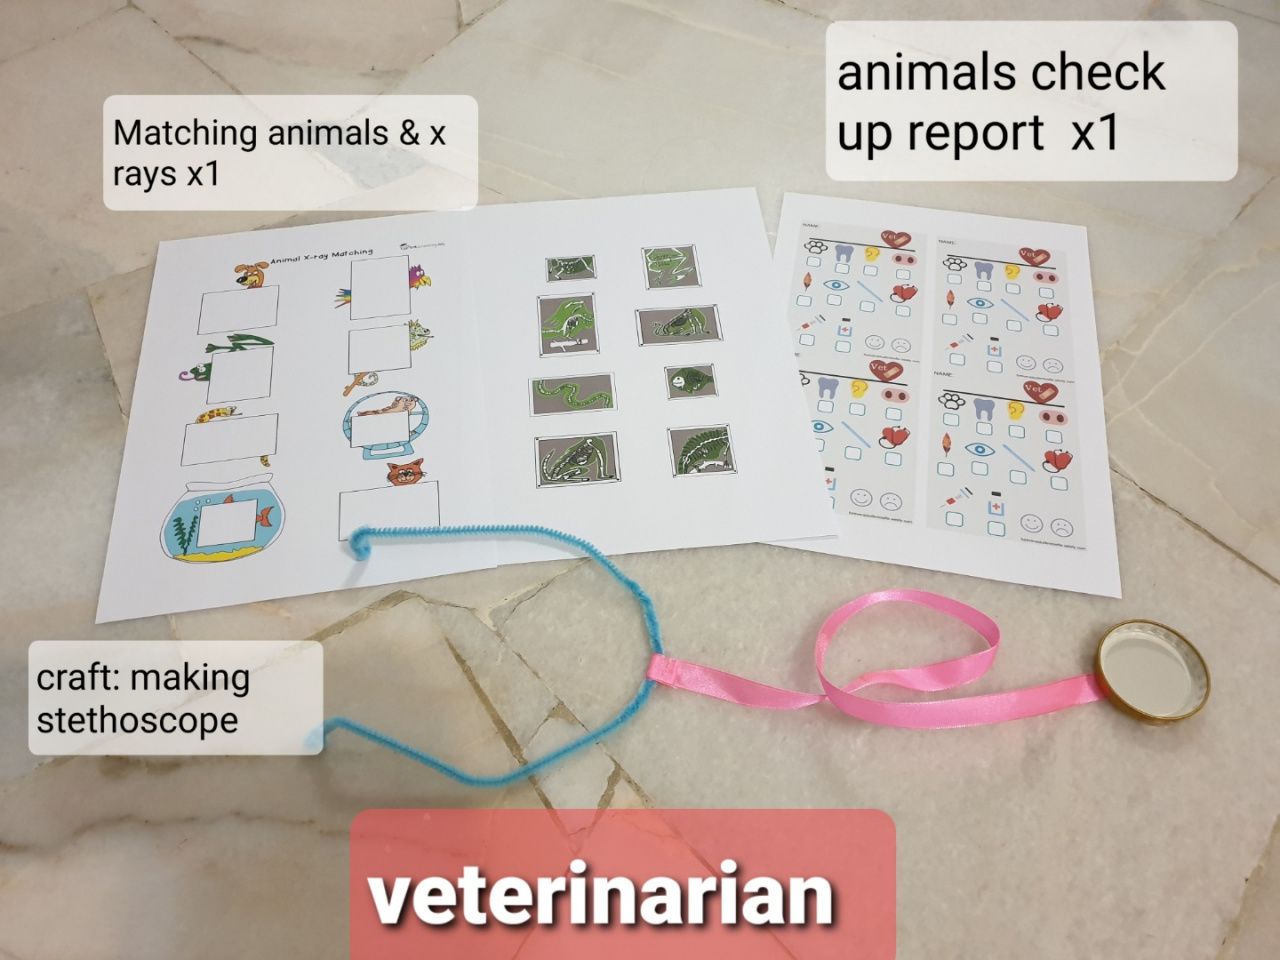 Online classes on veterinarian